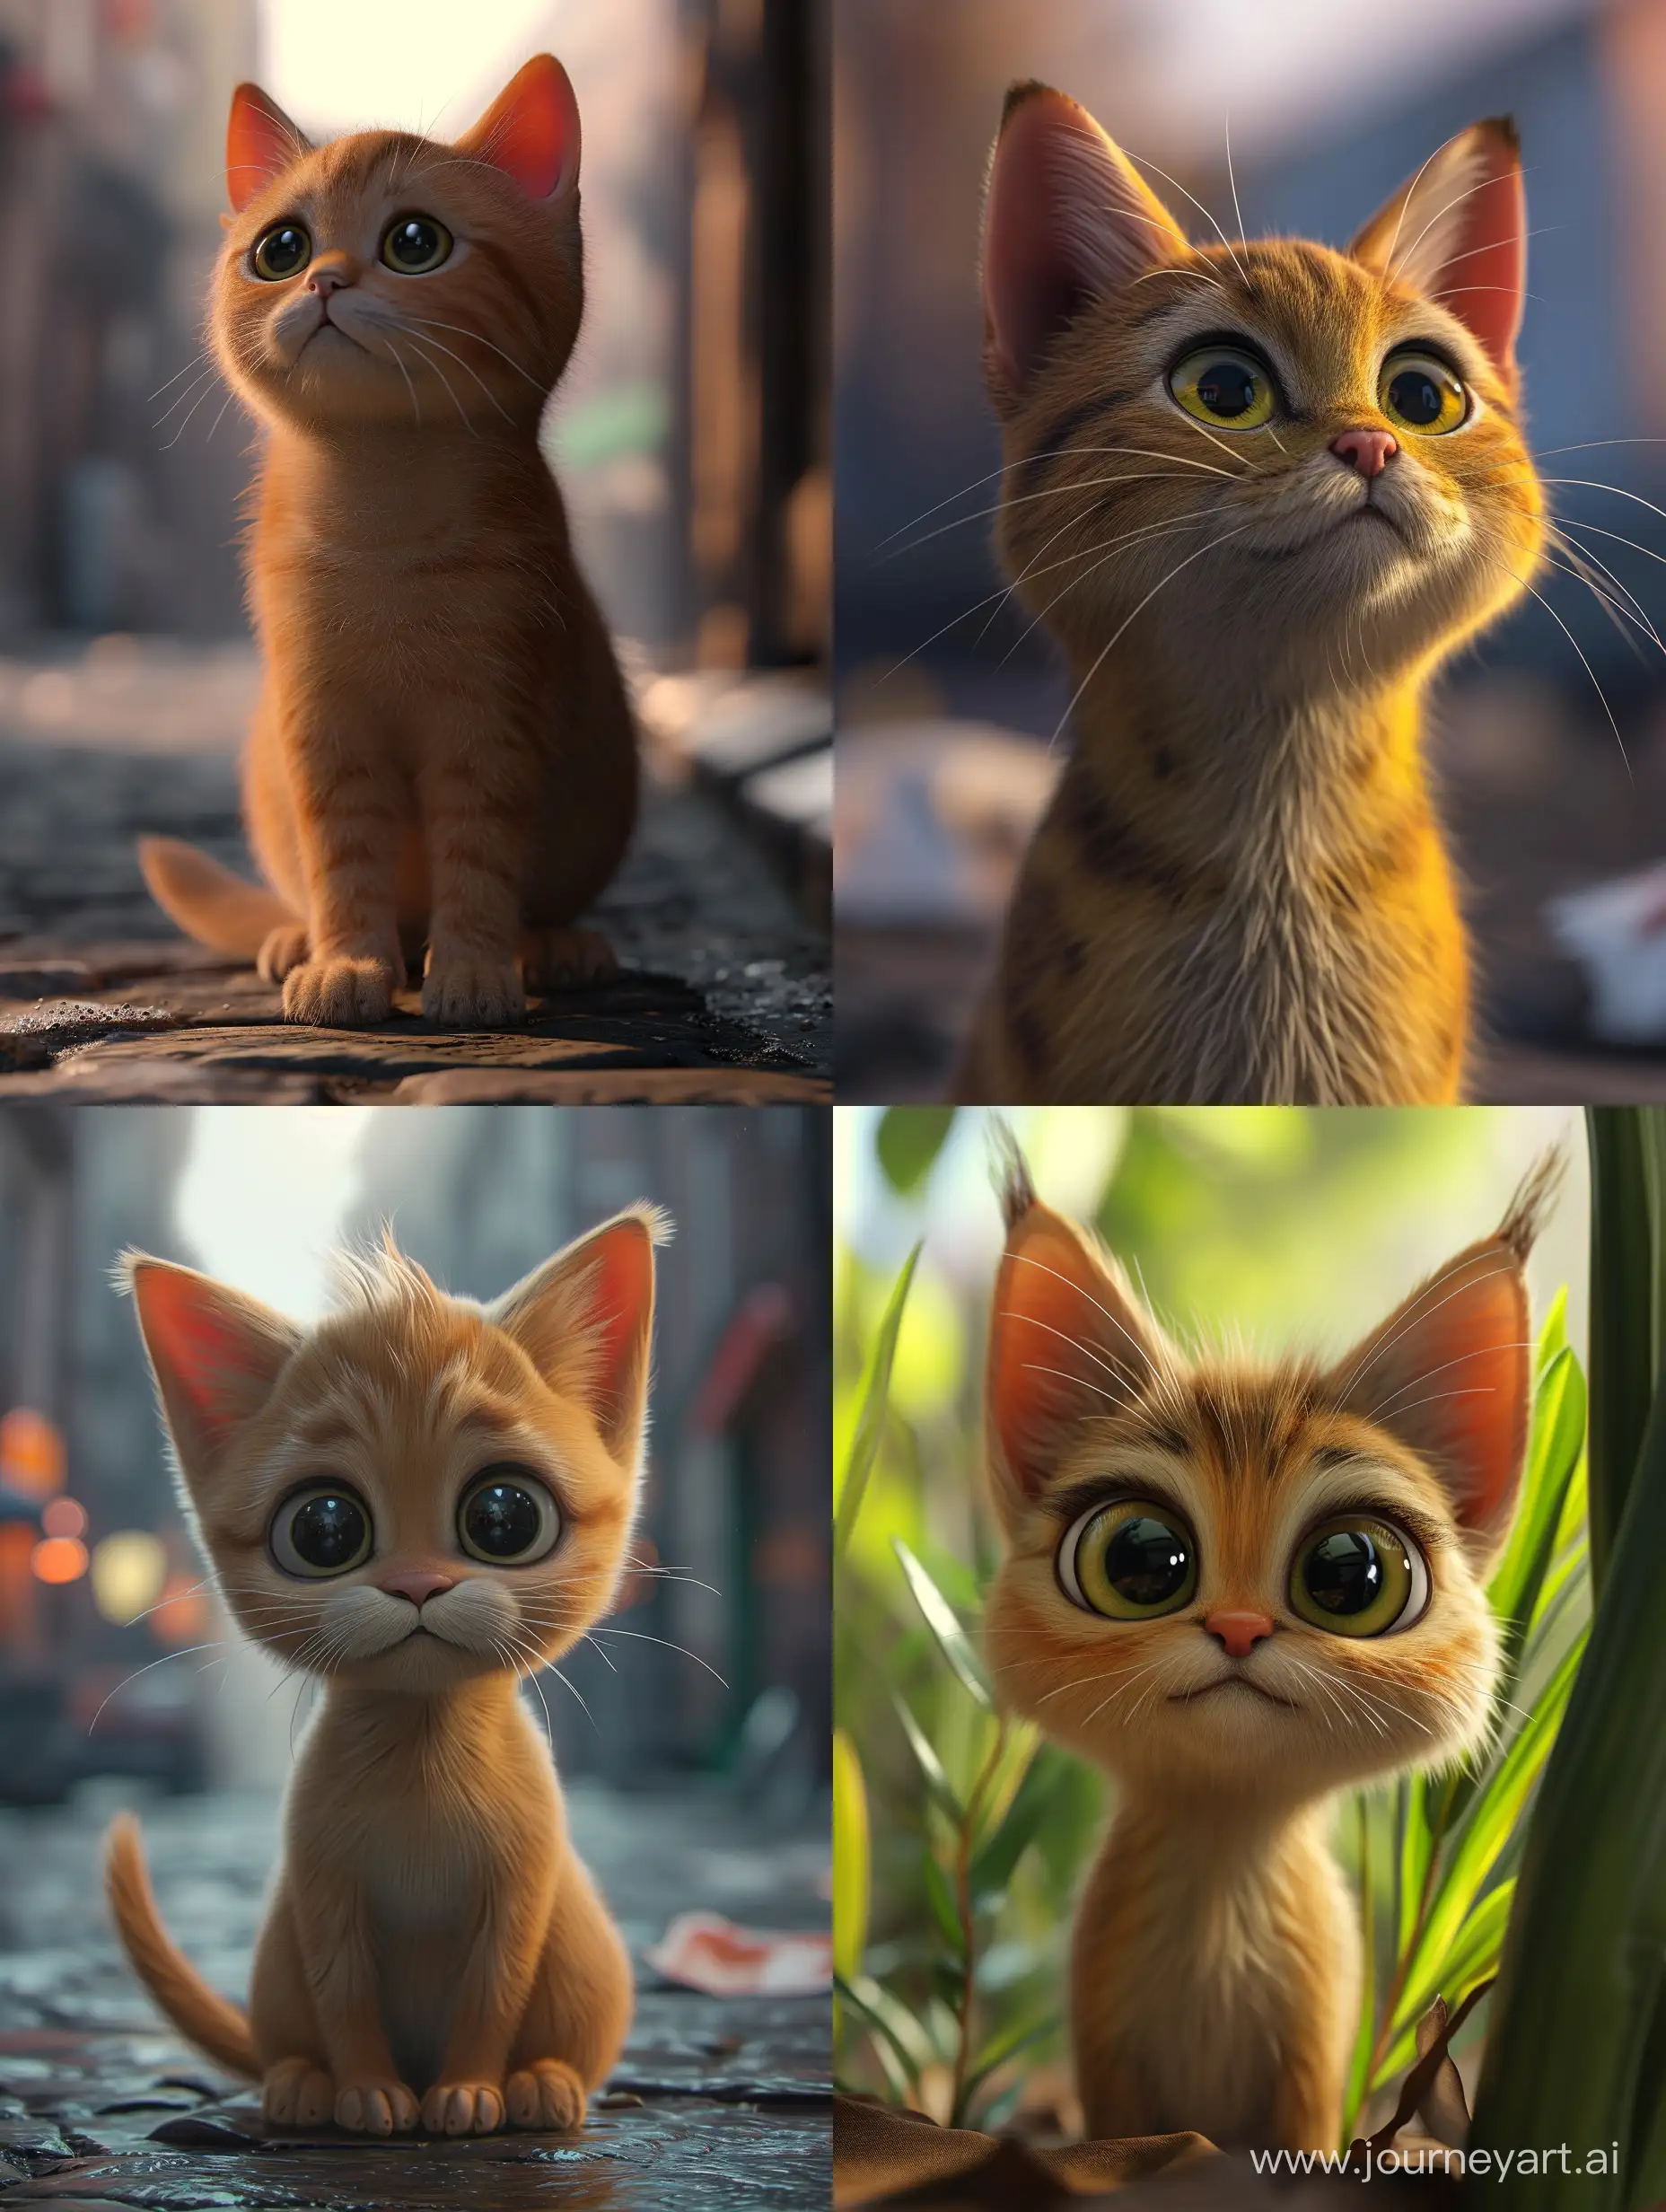 Charming-Hyperrealistic-Cat-Illustration-in-JeanBaptiste-Monge-and-Pixar-Style